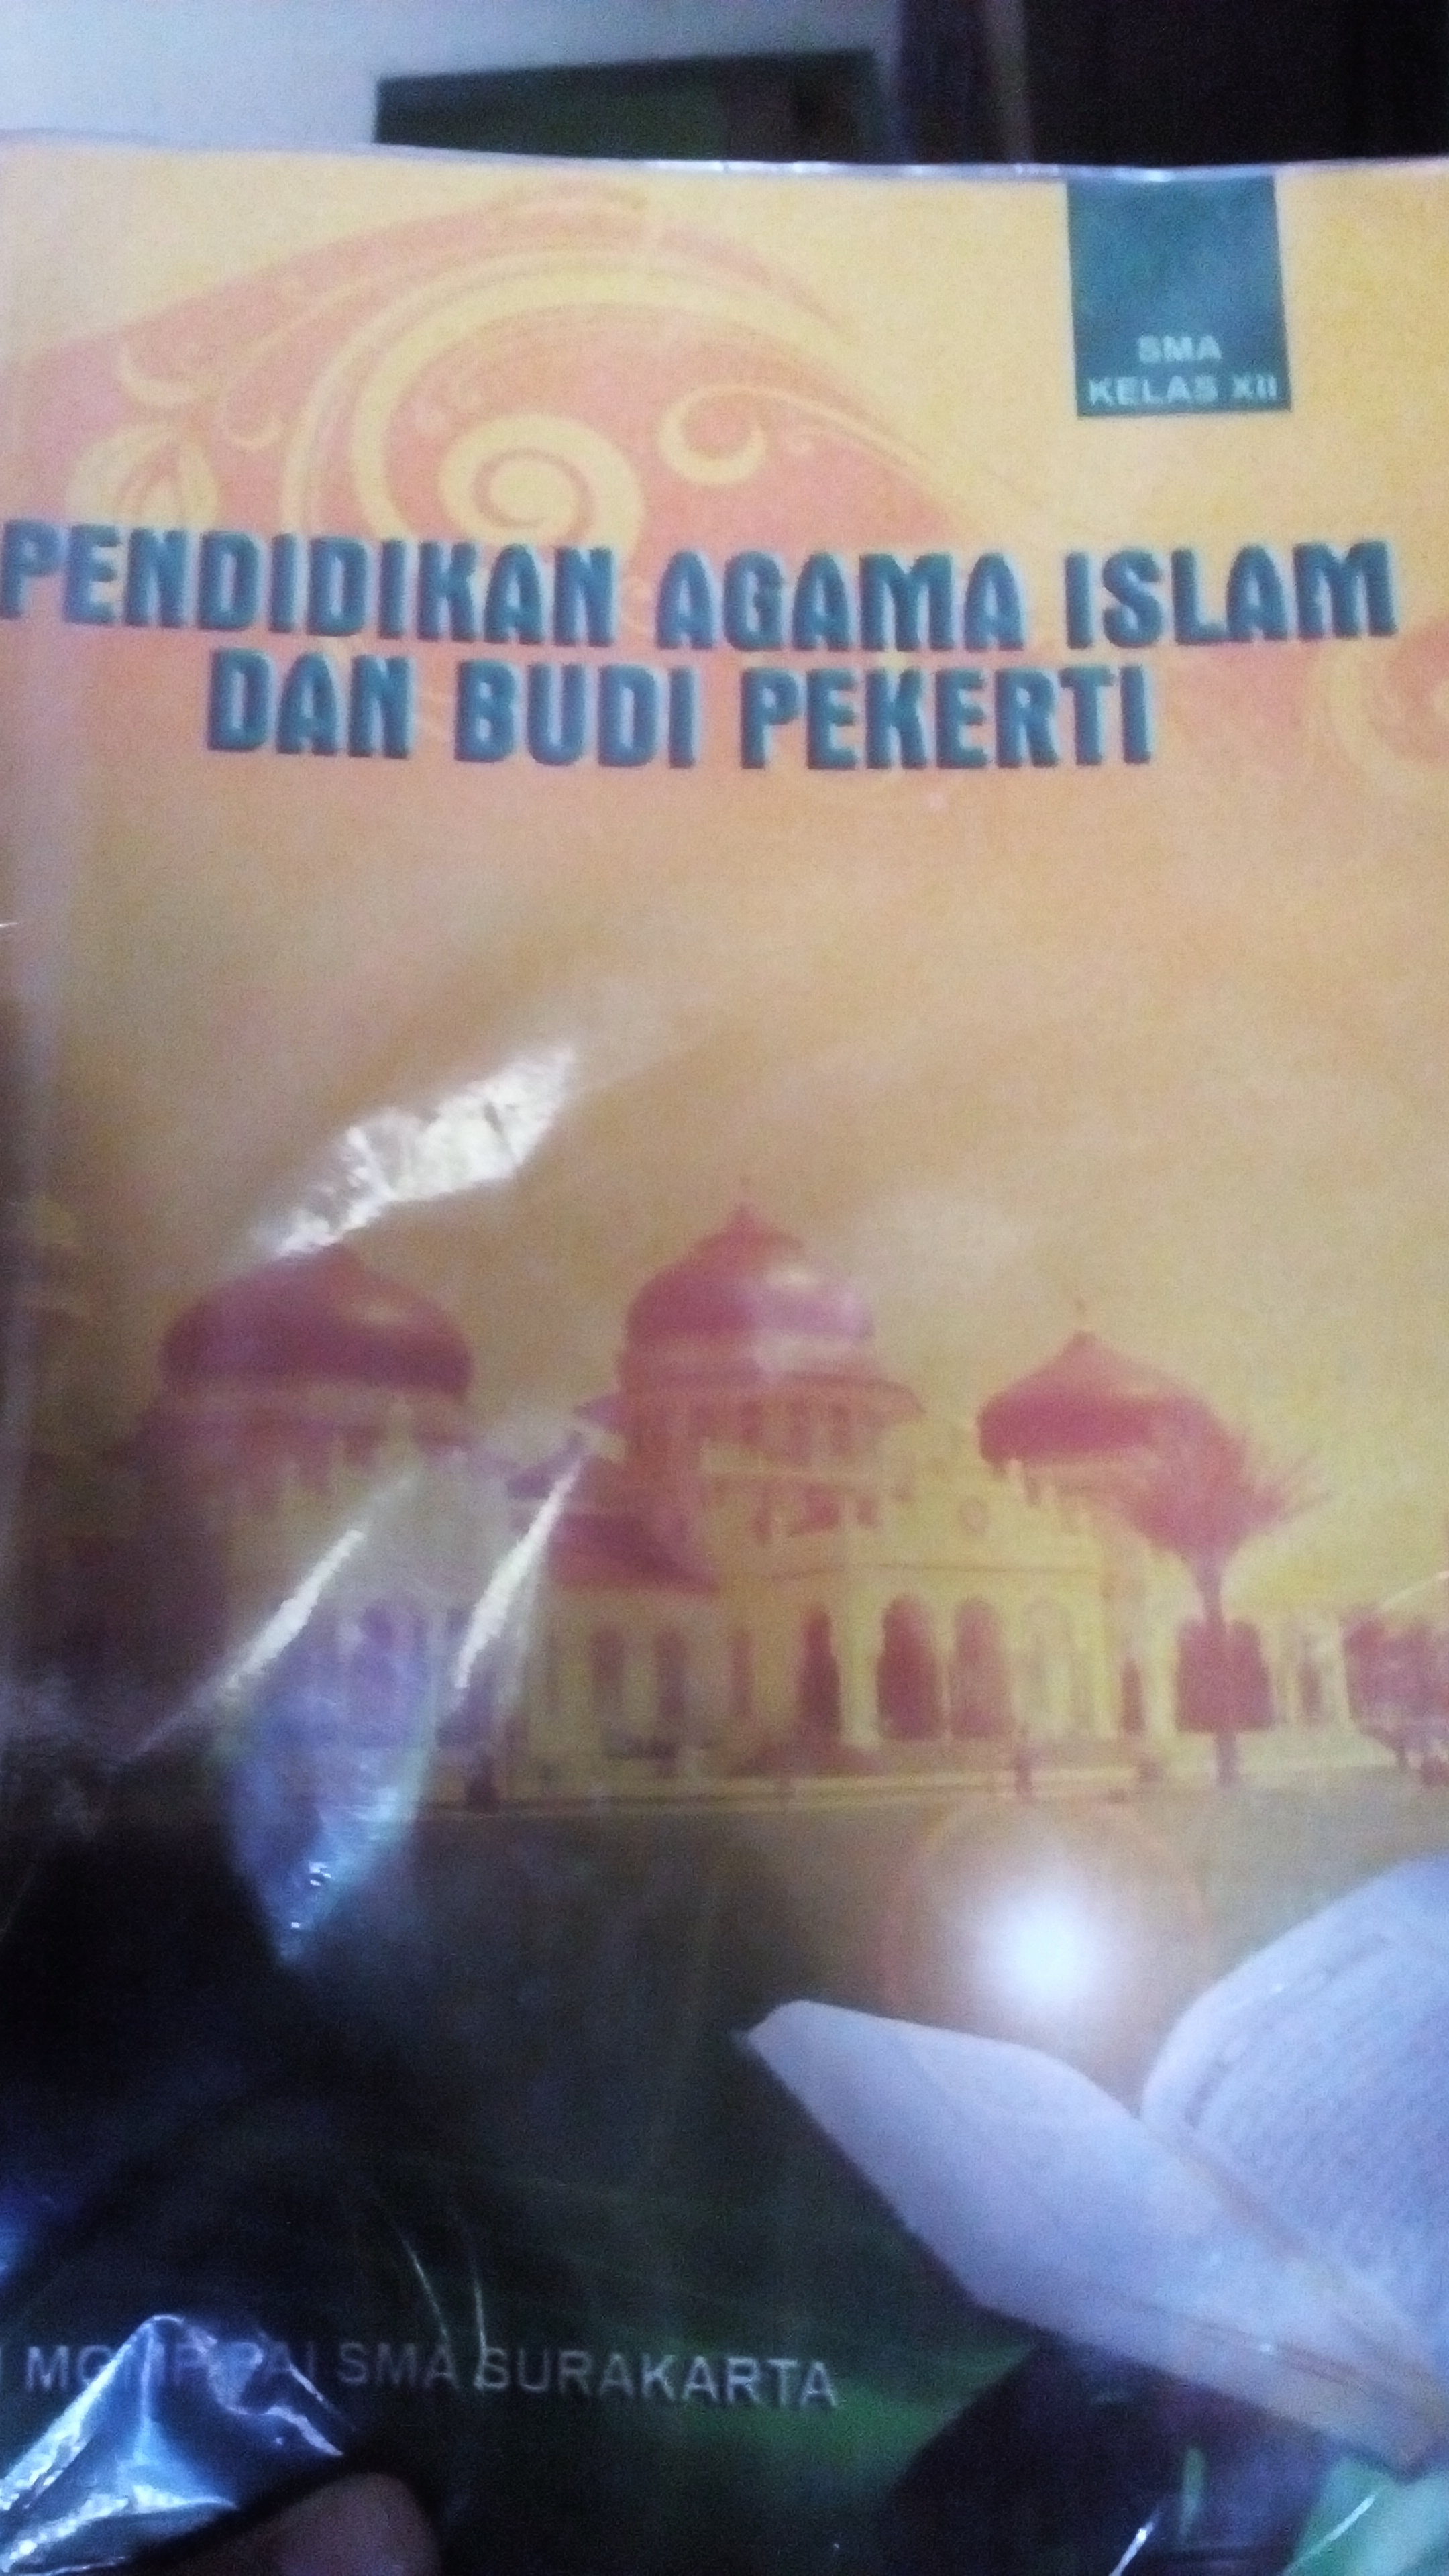 Resensi Buku Pendidikan Agama Islam Sheilla Kartika